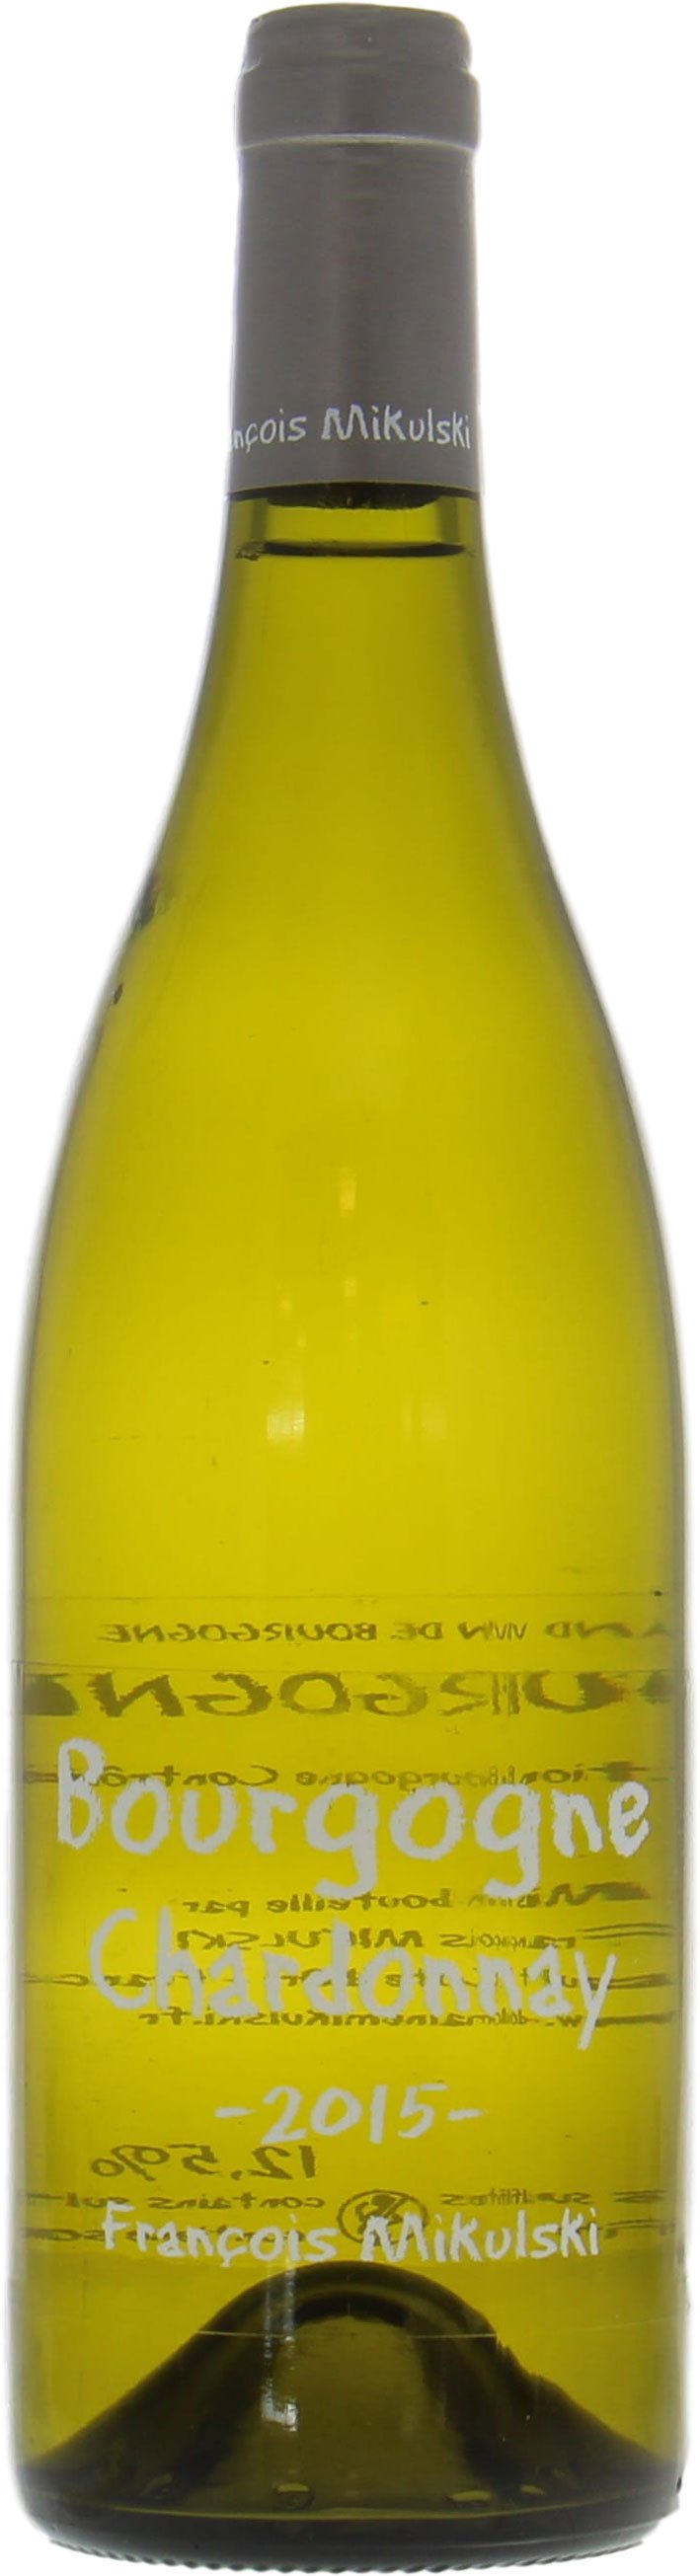 Domaine Francois Mikulski - Bourgogne Chardonnay 2015 Perfect